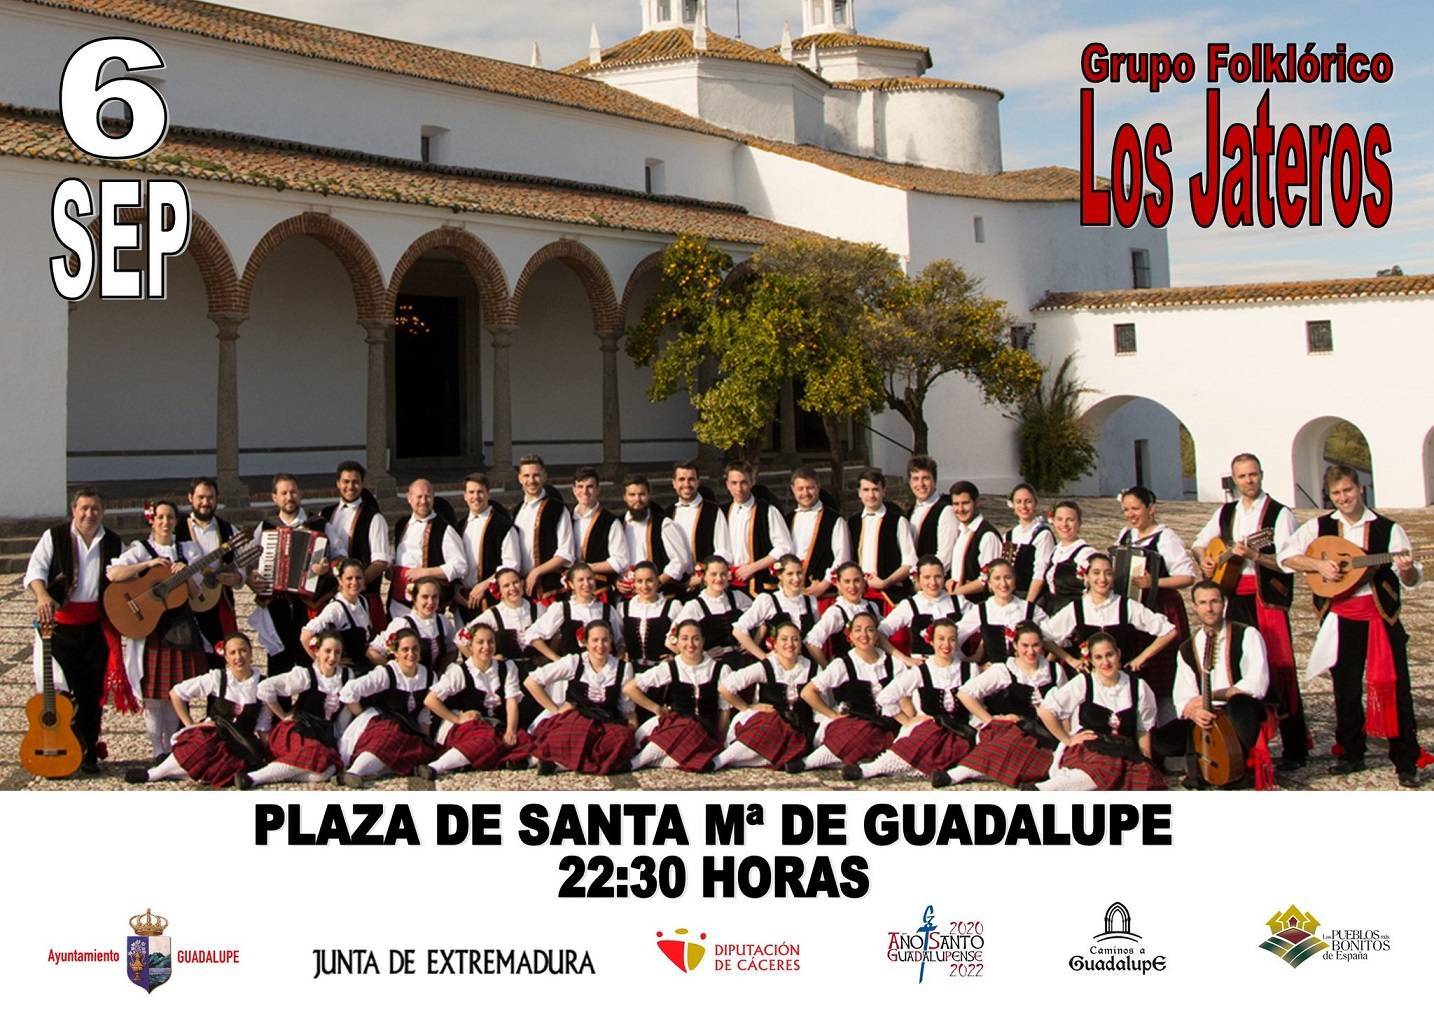 Grupo Folklórico Los Jateros (2022) - Guadalupe (Cáceres)